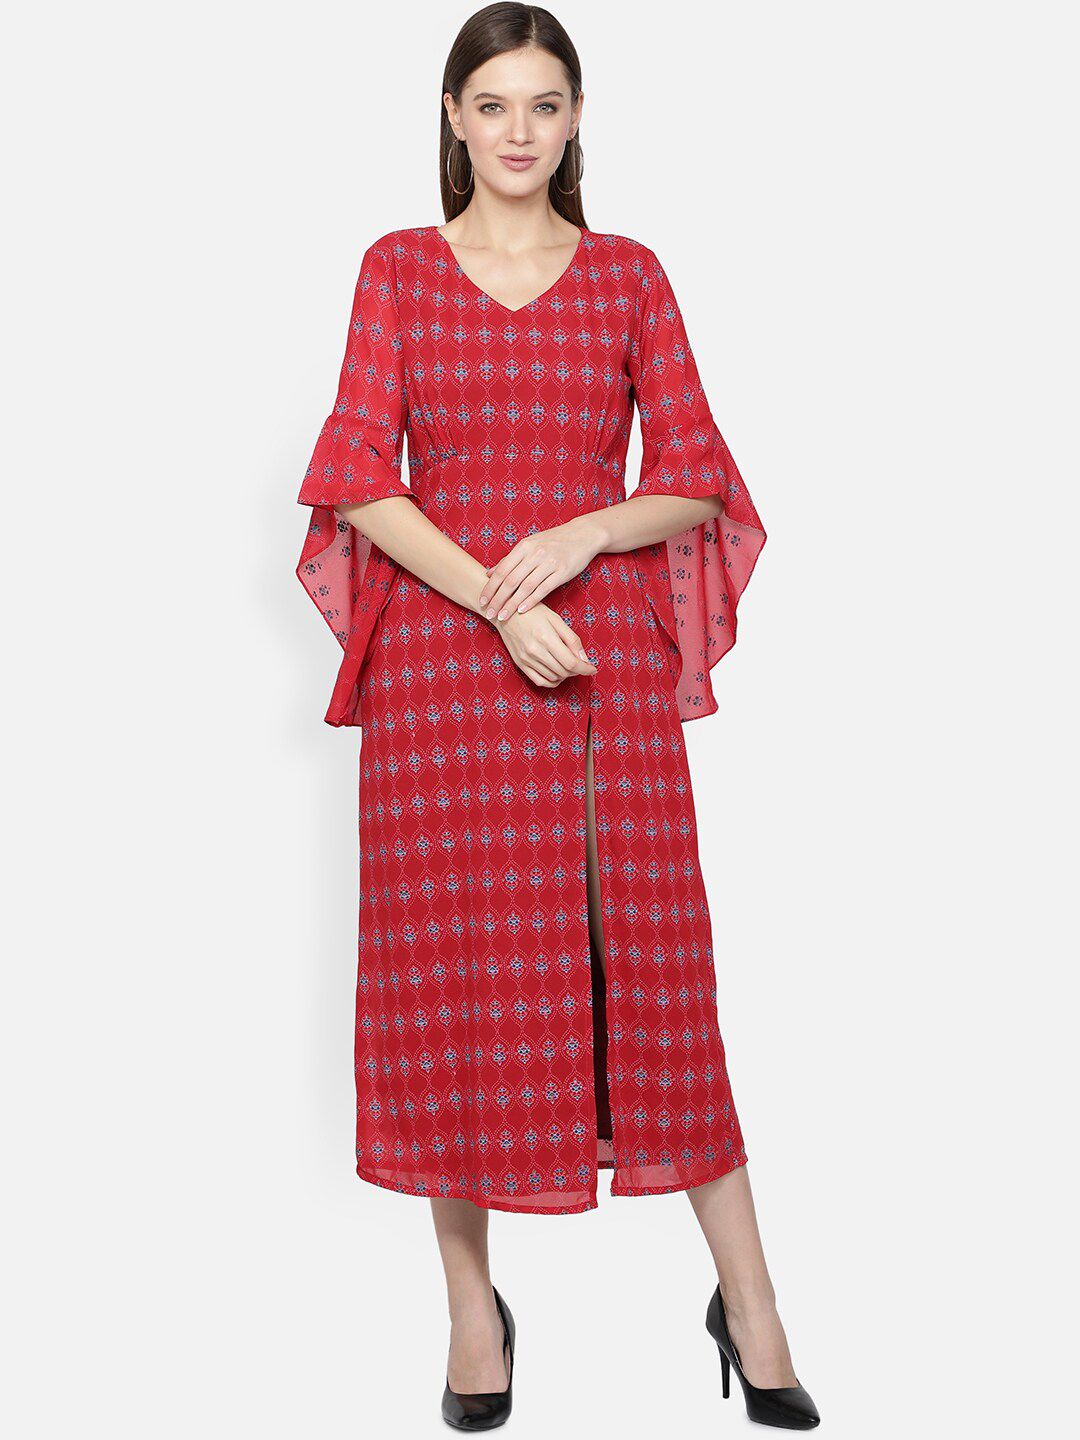 DESI WOMANIYA Red Printed Georgette A-Line Midi Dress Price in India